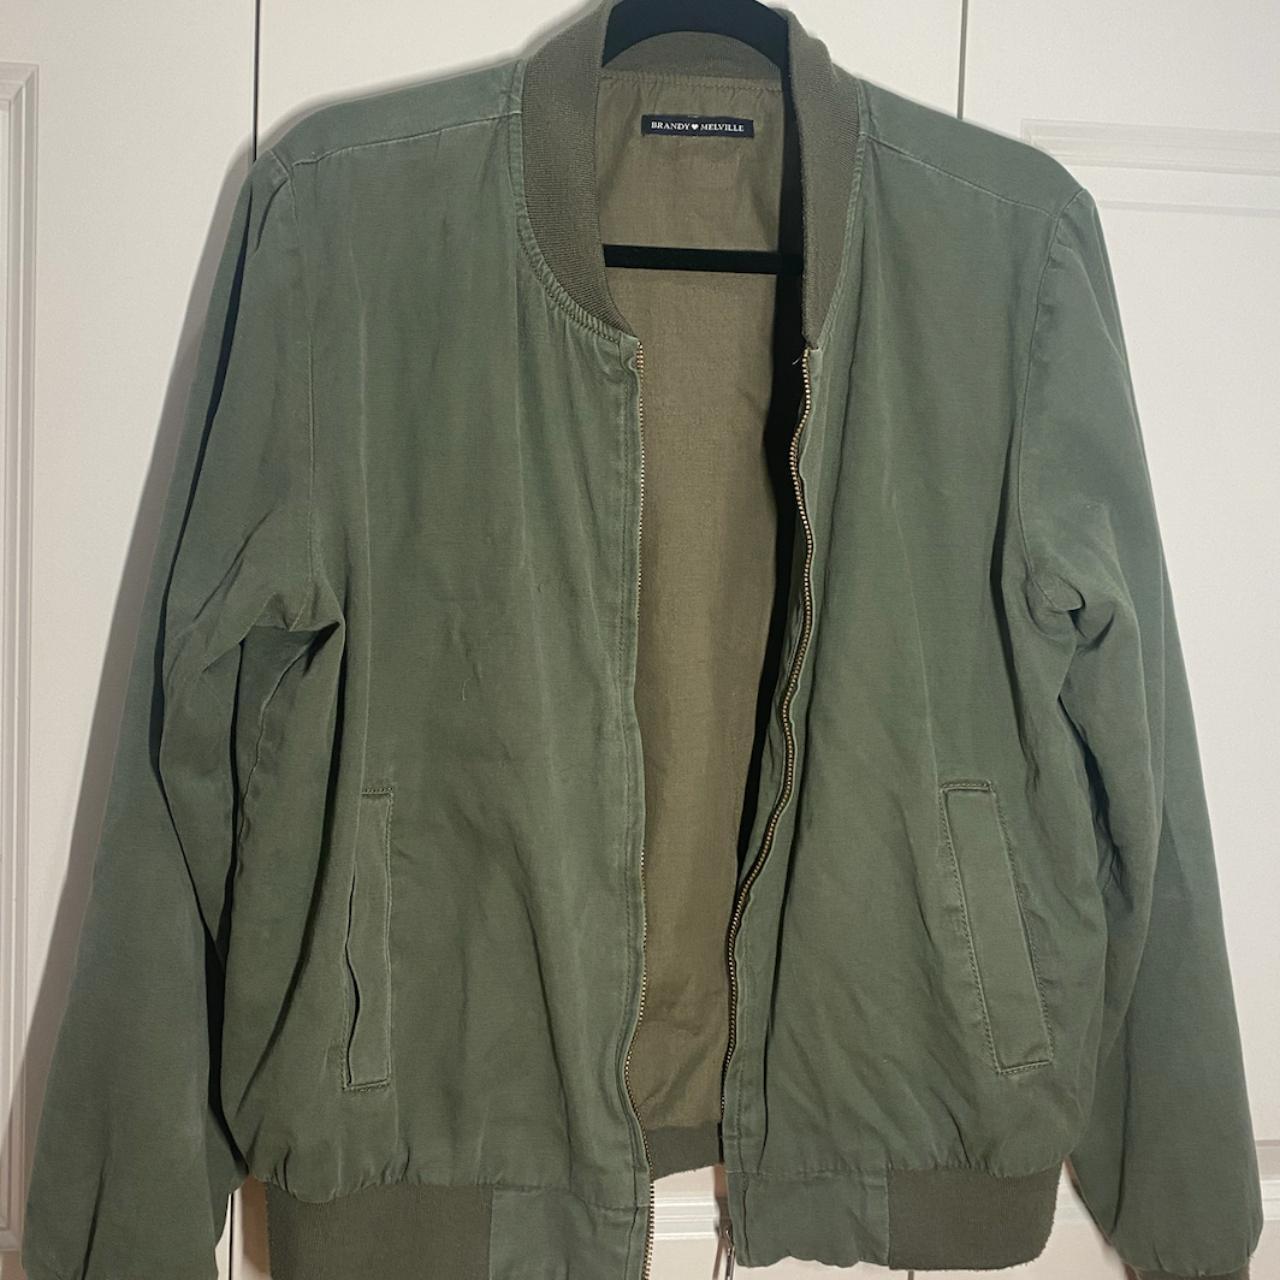 Oversized army green Brandy Melville bomber jacket - Depop